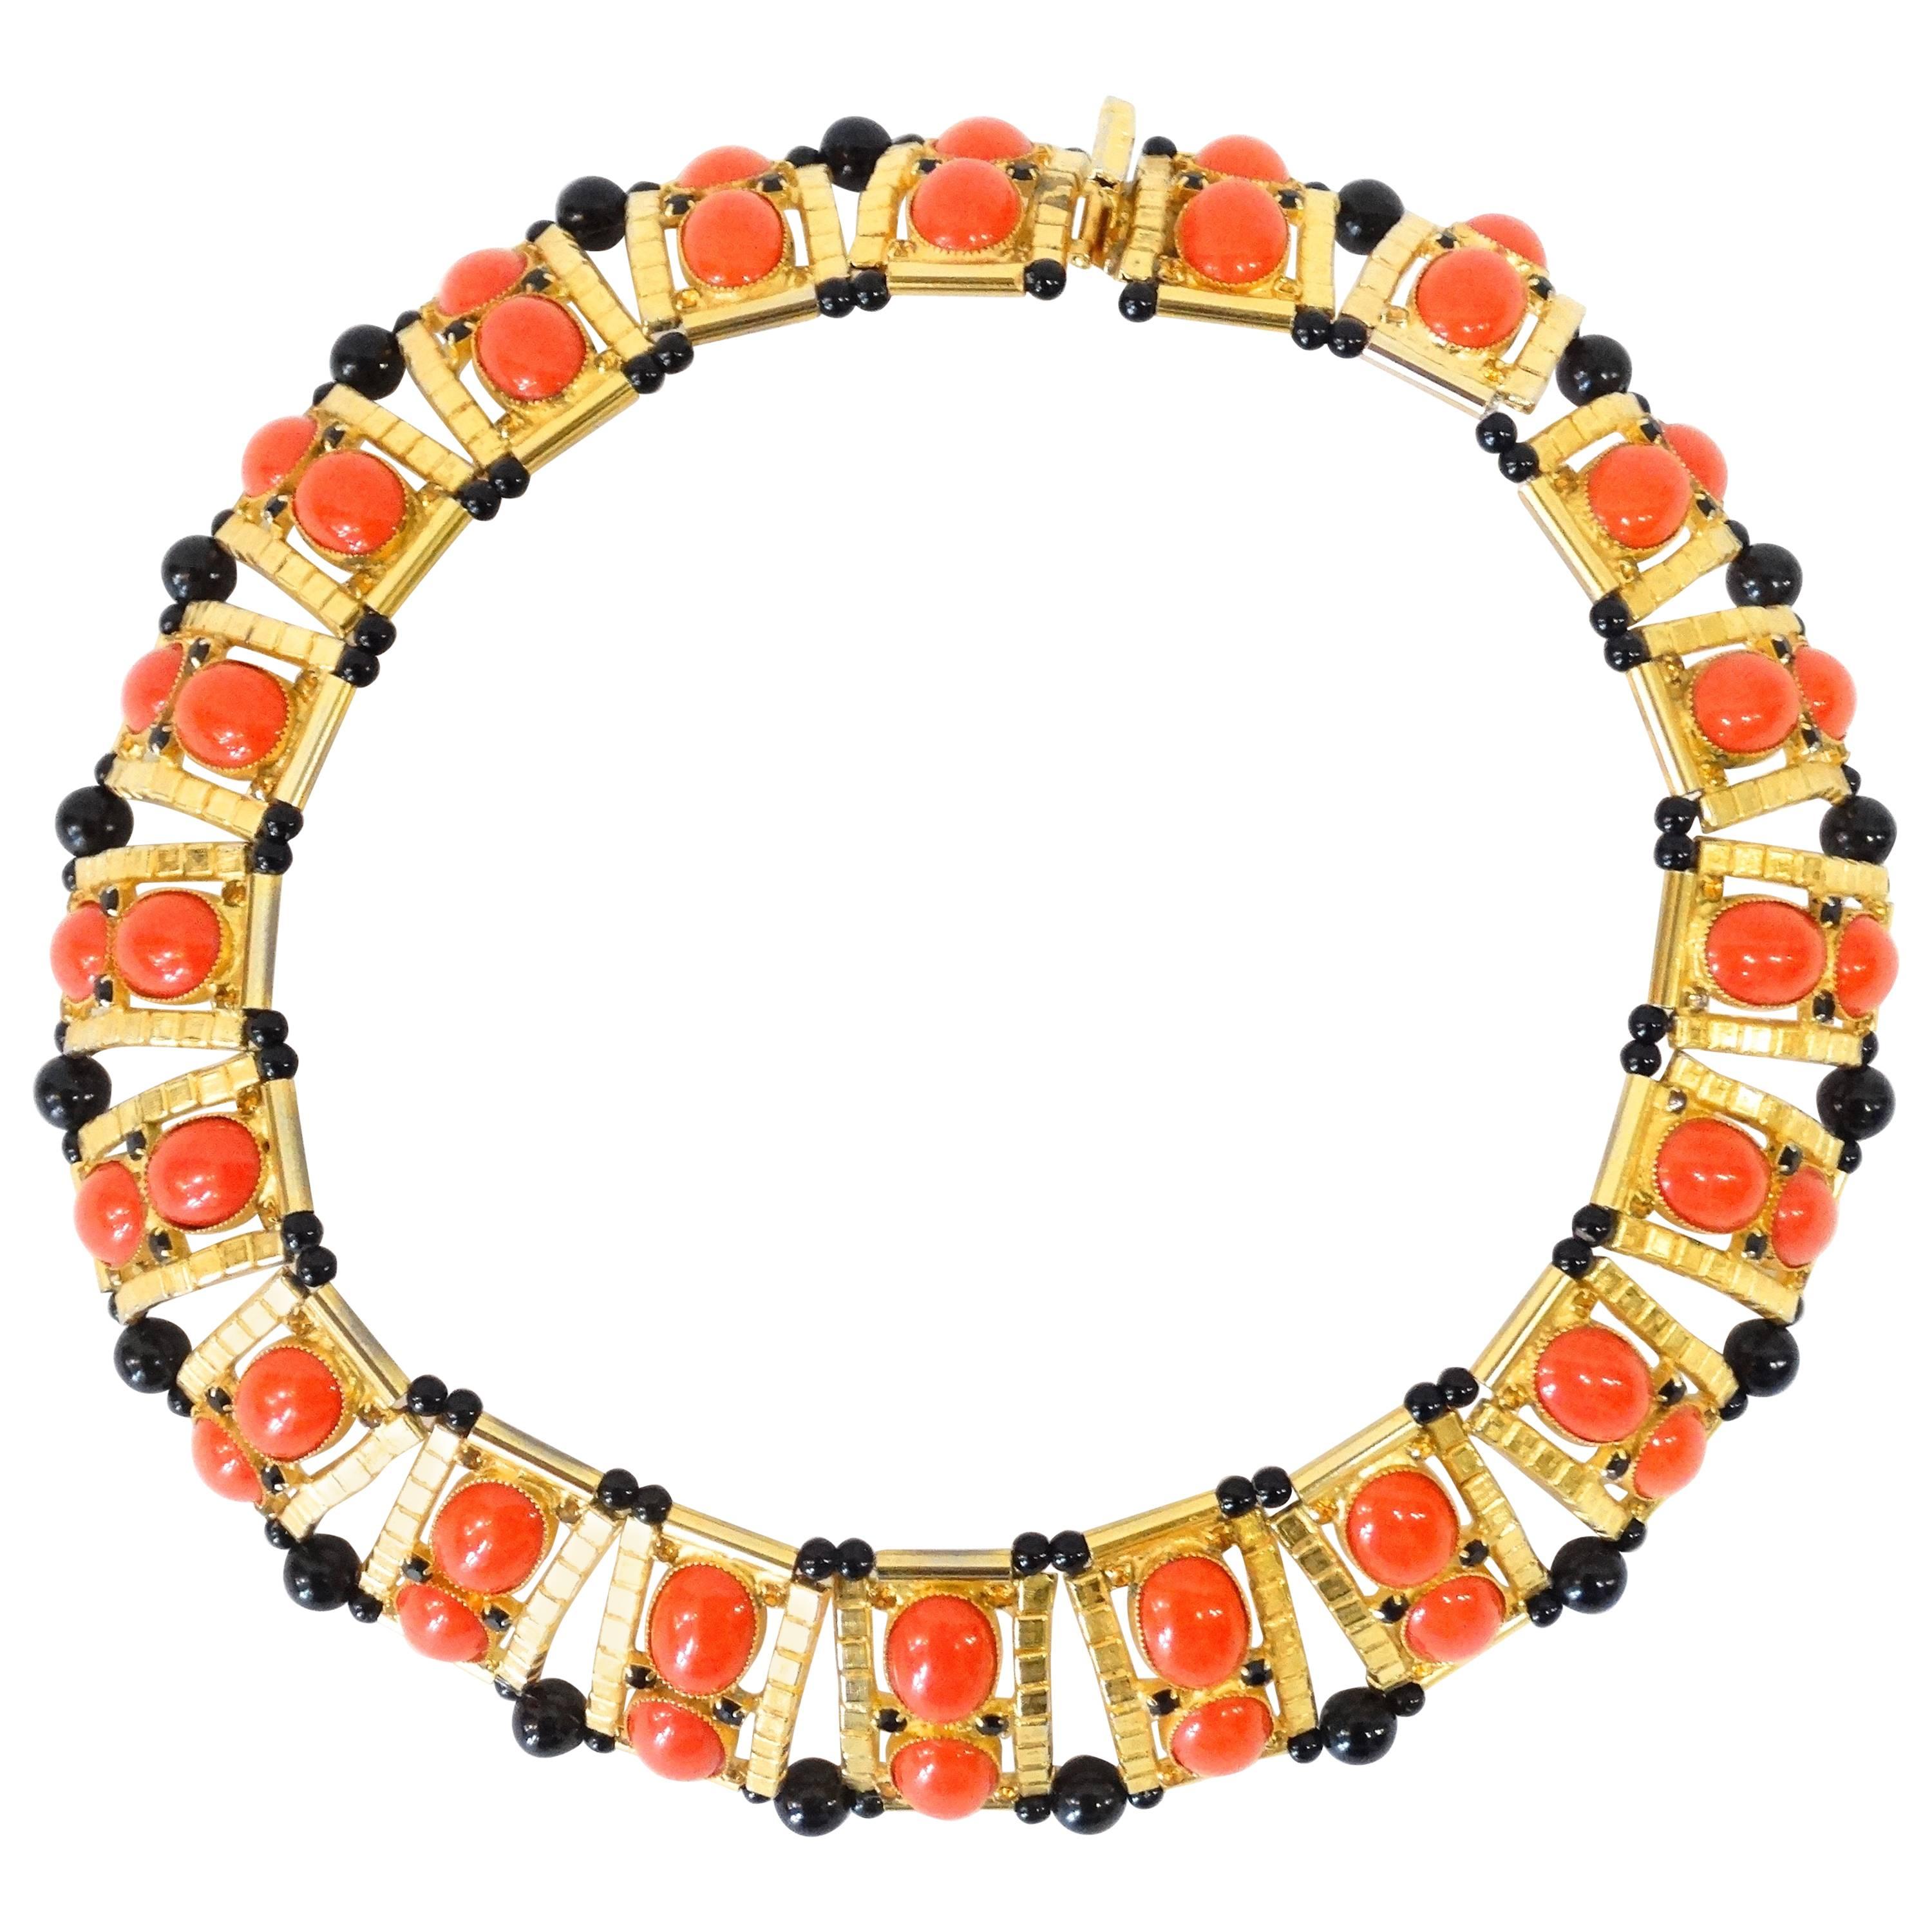 1974 William de Lillo Egyptian Revival Collar Necklace 